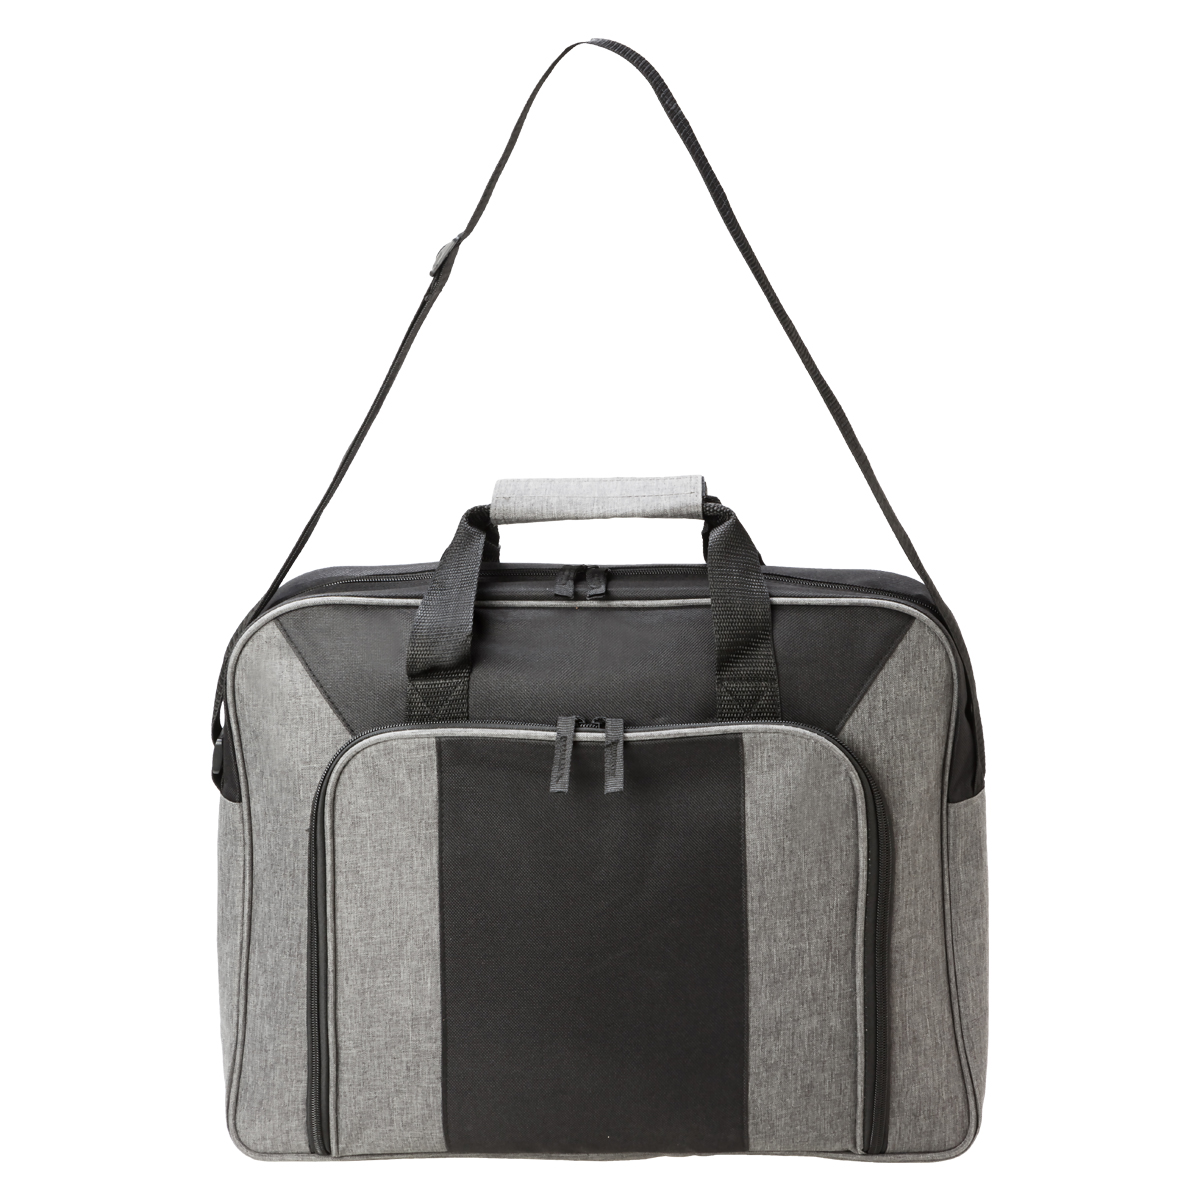 Maxcron Laptop Bag Product Image